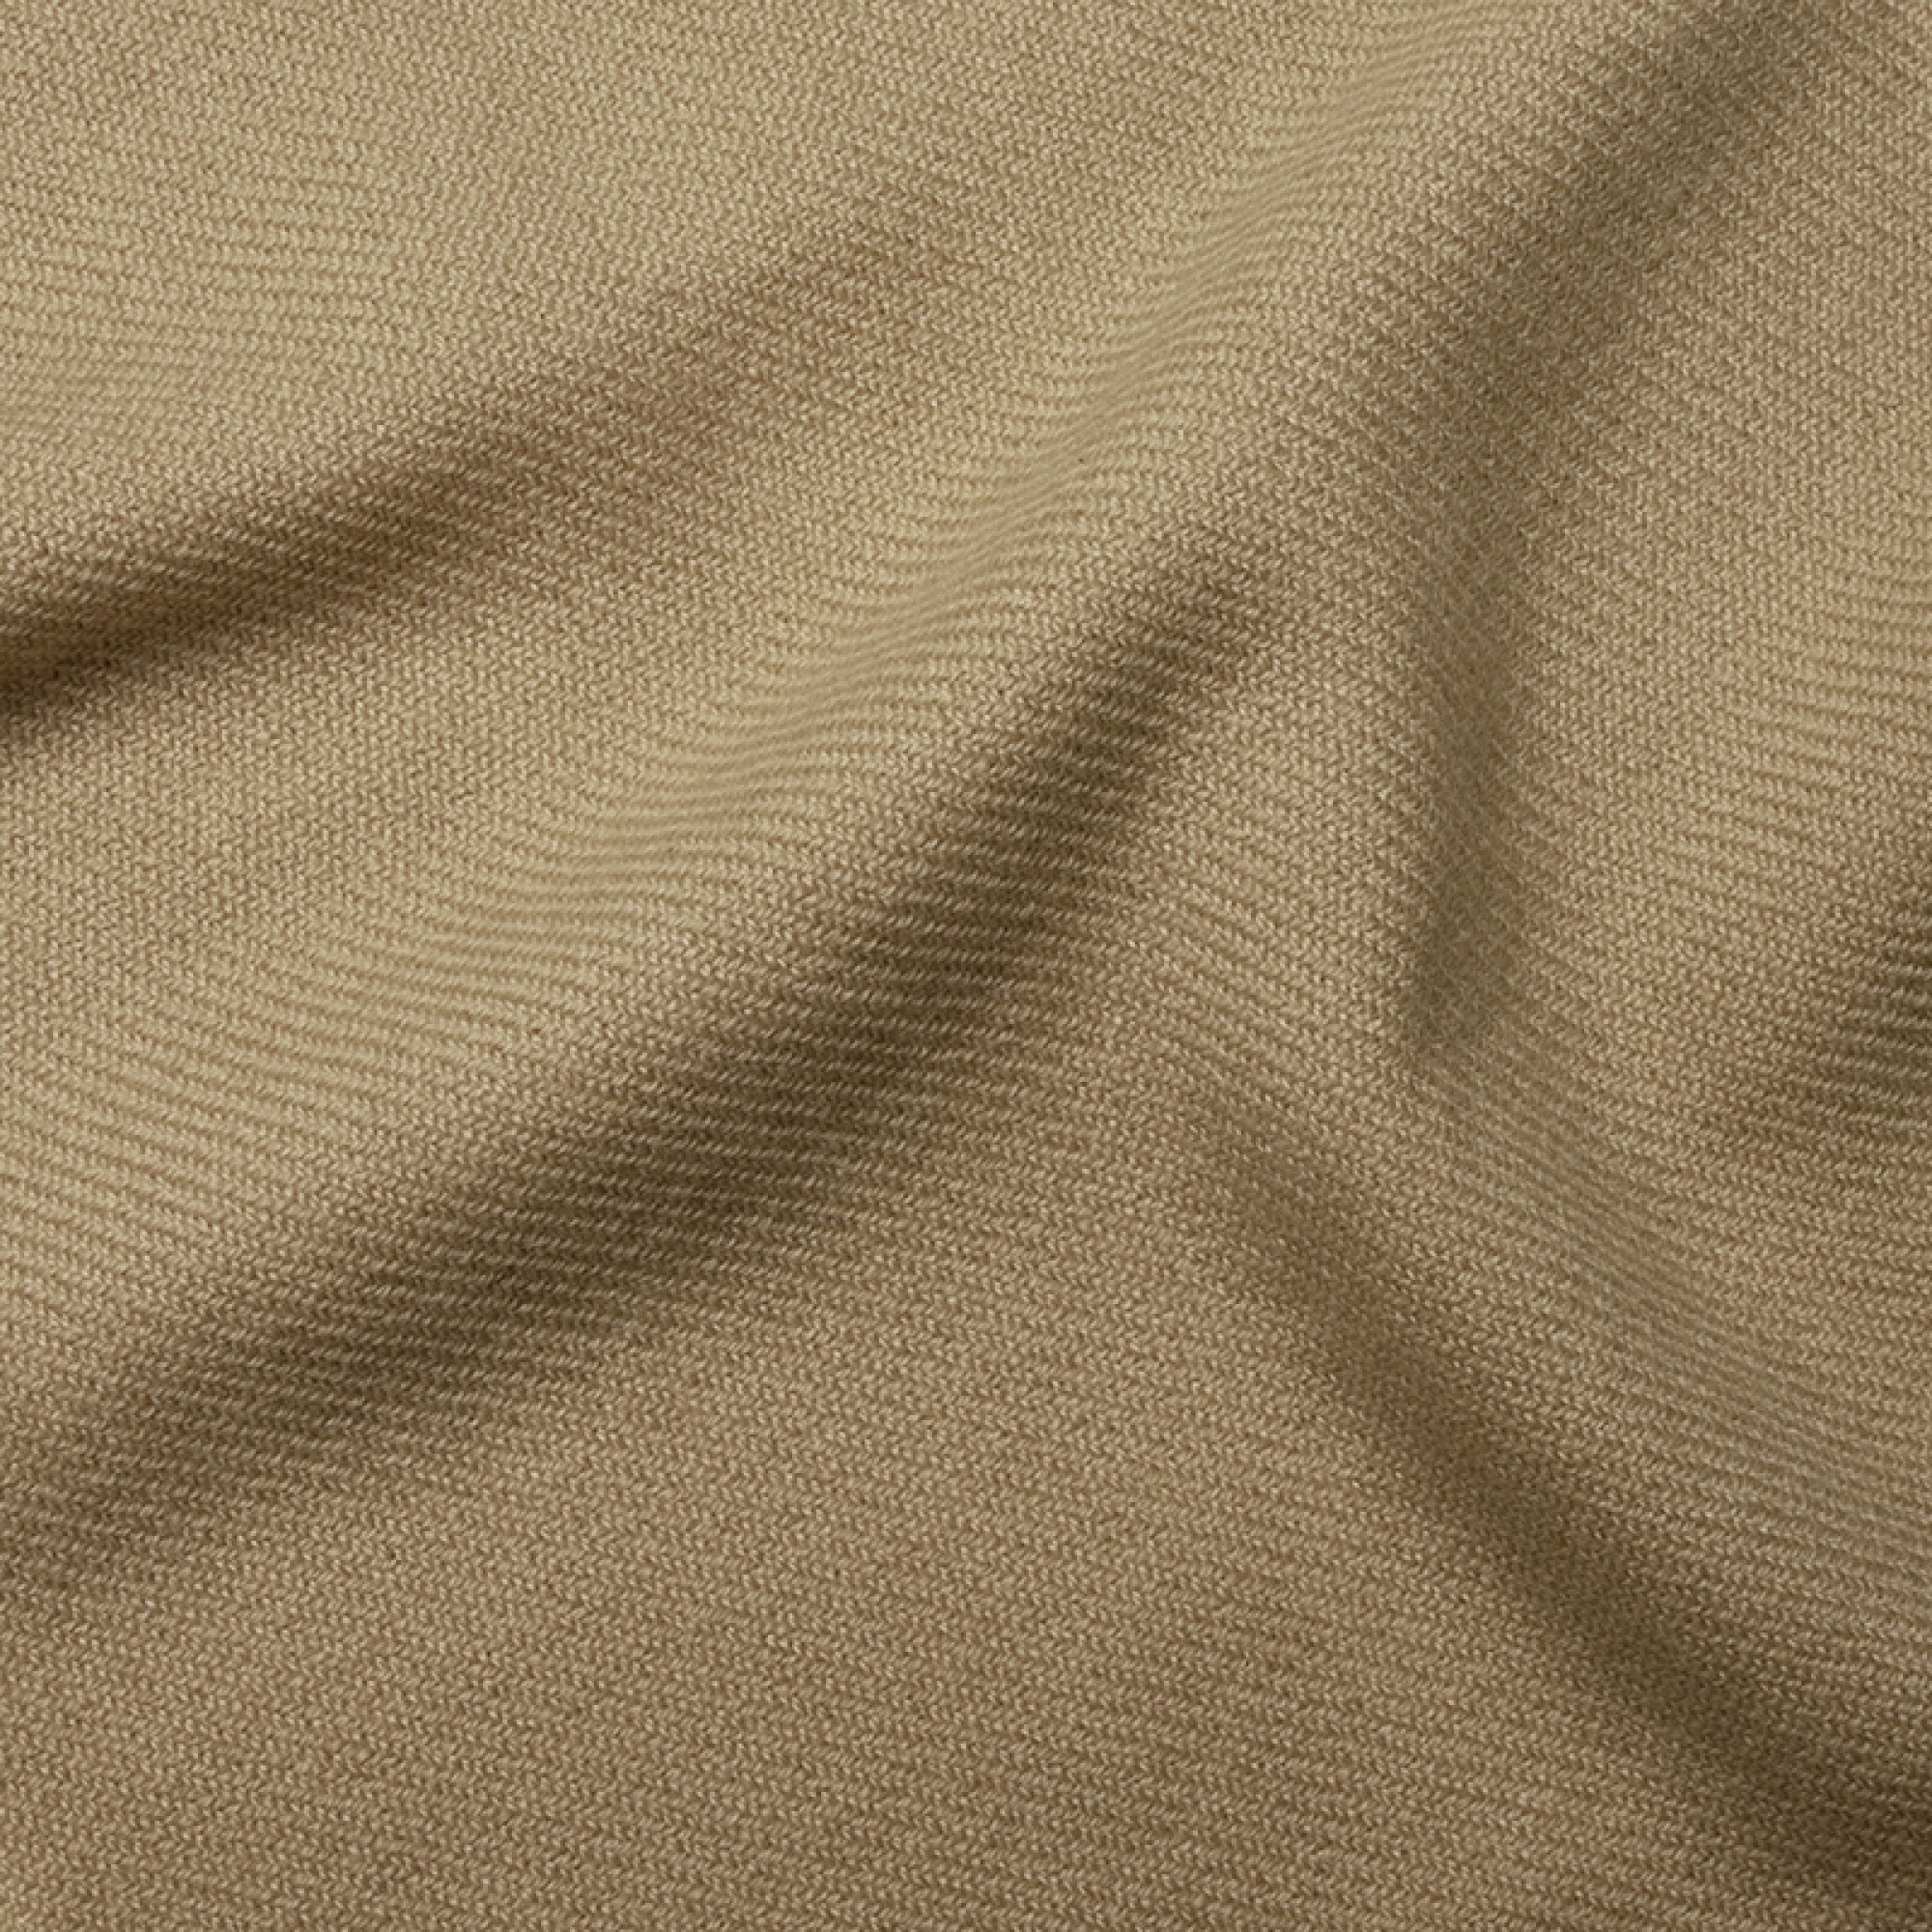 Cashmere cashmere donna toodoo plain l 220 x 220 beige 220x220cm